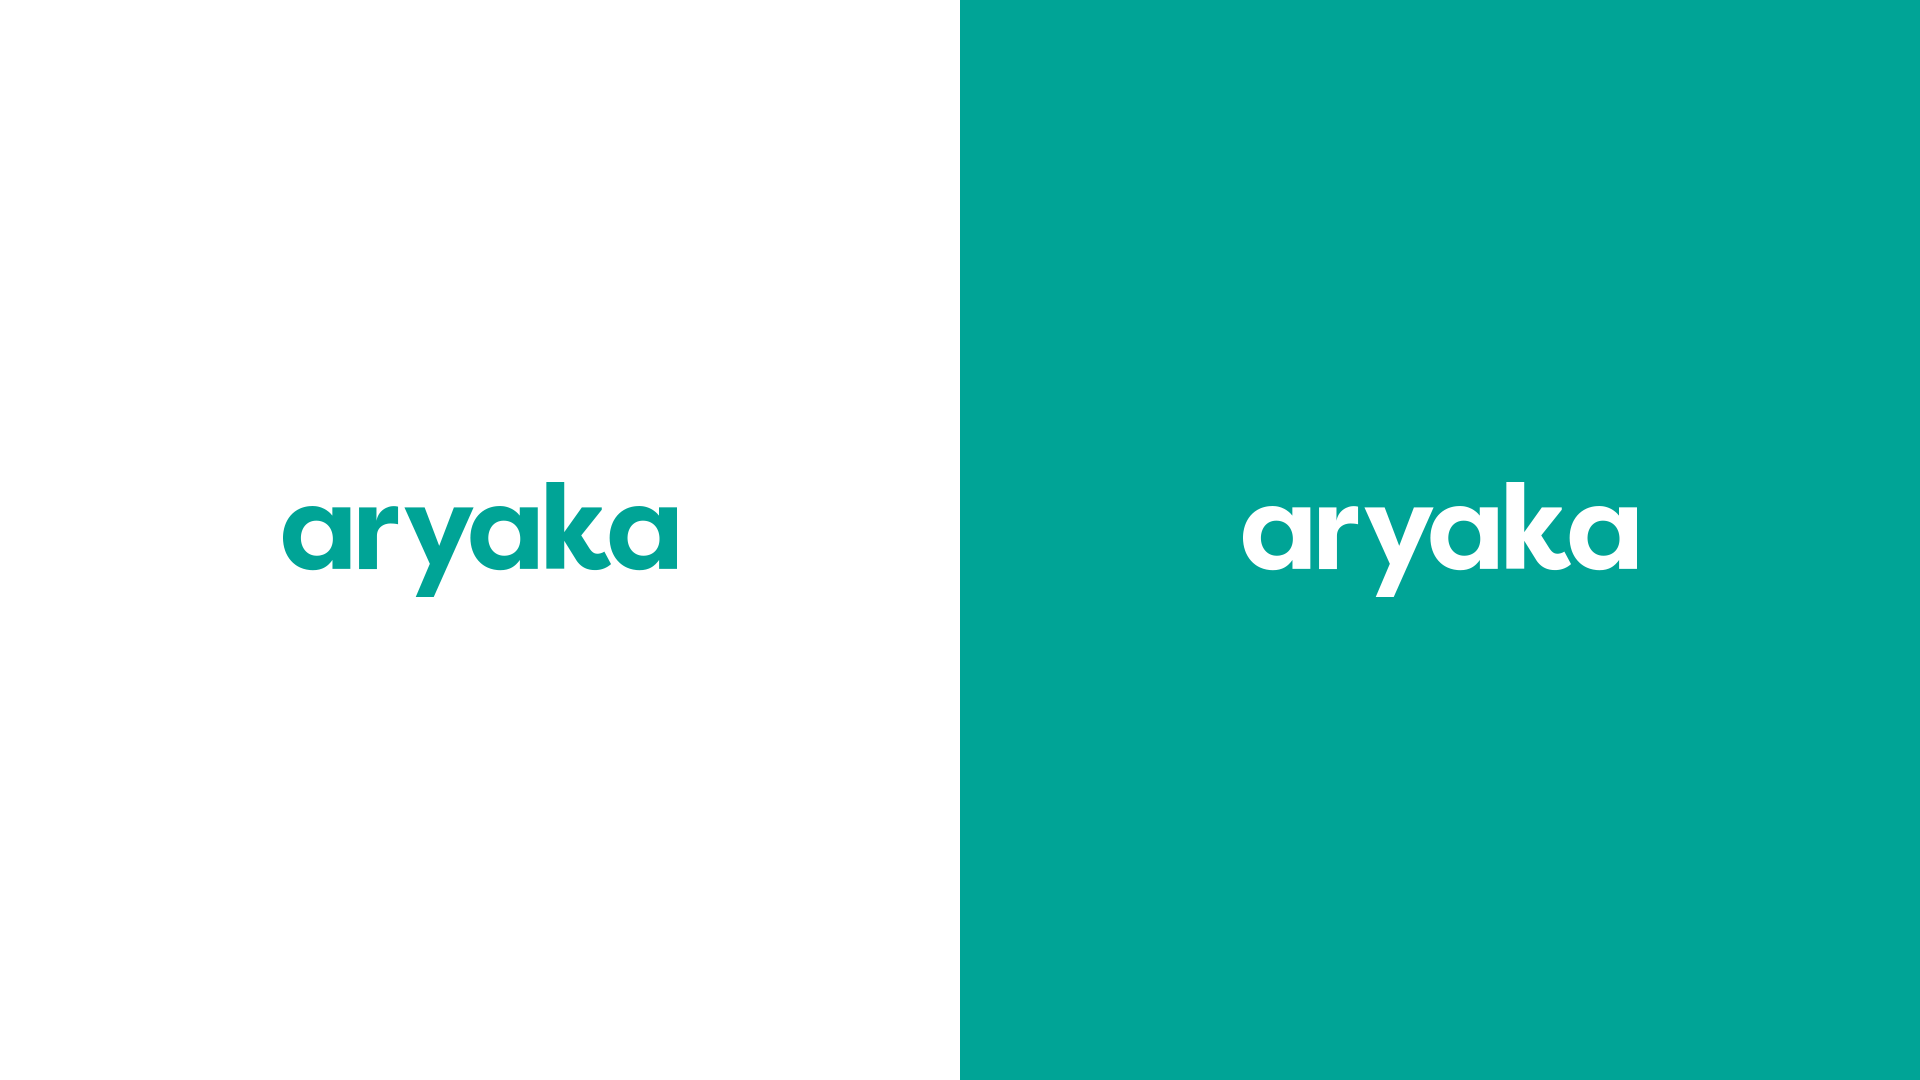 Ryaka Logo - Dribbble - aryaka-logo-full-spacetime.png by Caleb Sylvest